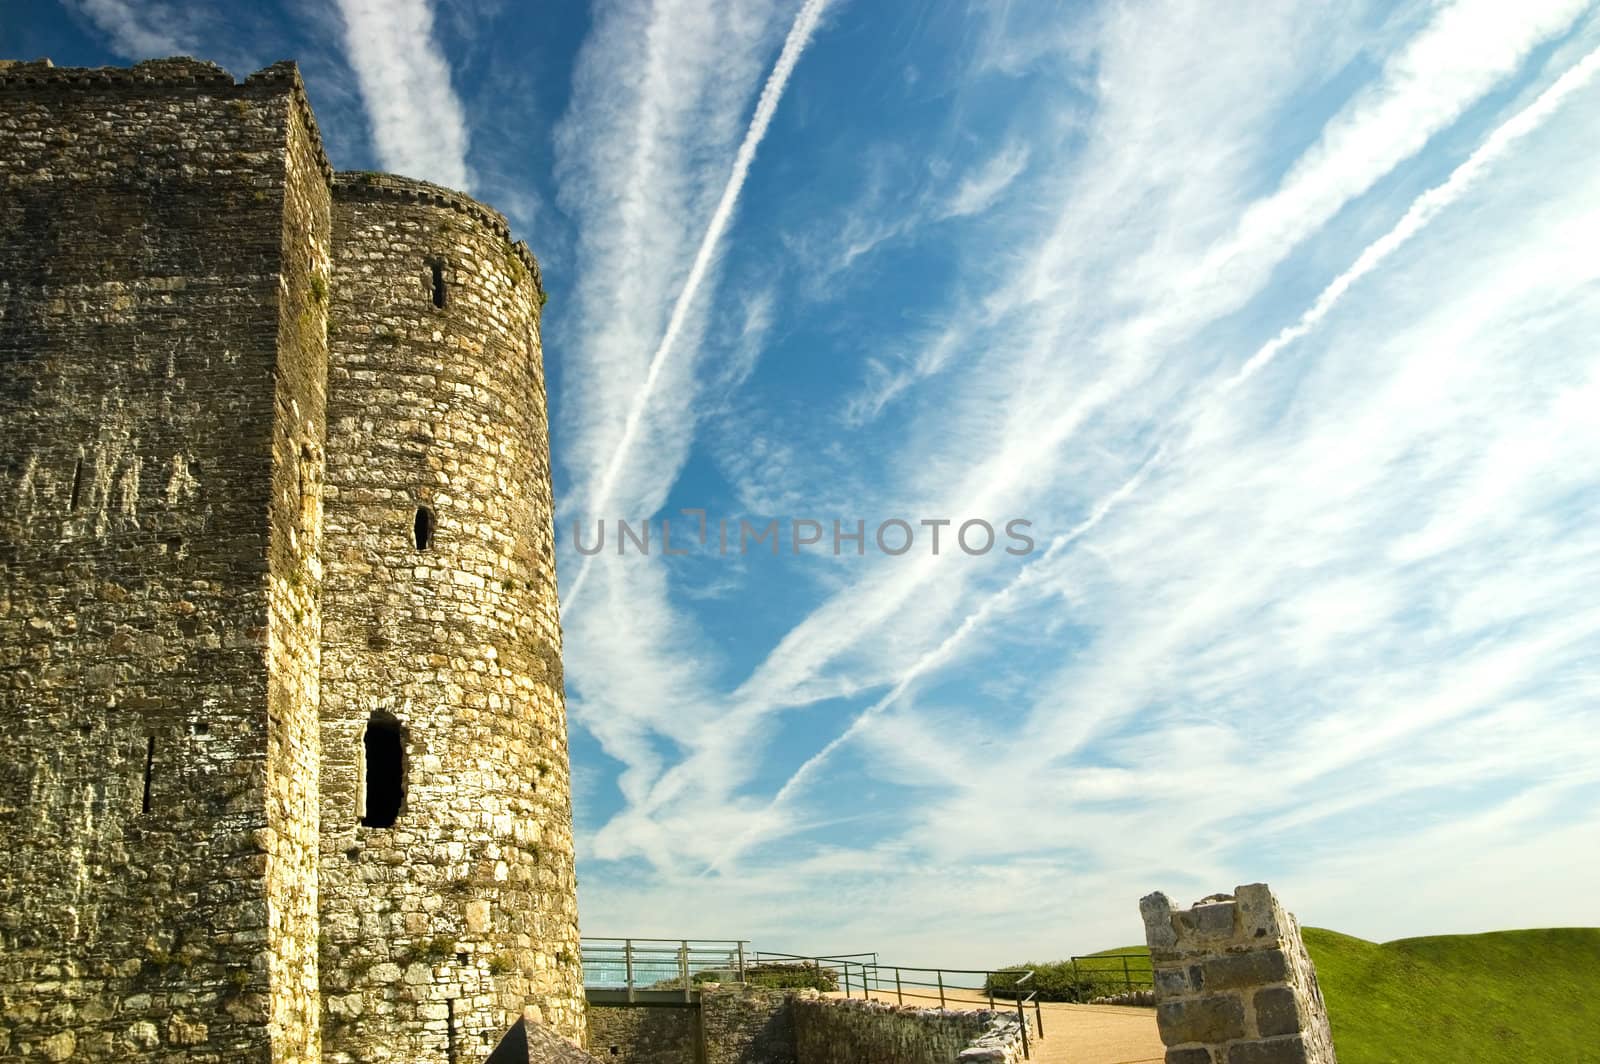 A Colourful Photo of Castle Ruins (uk)